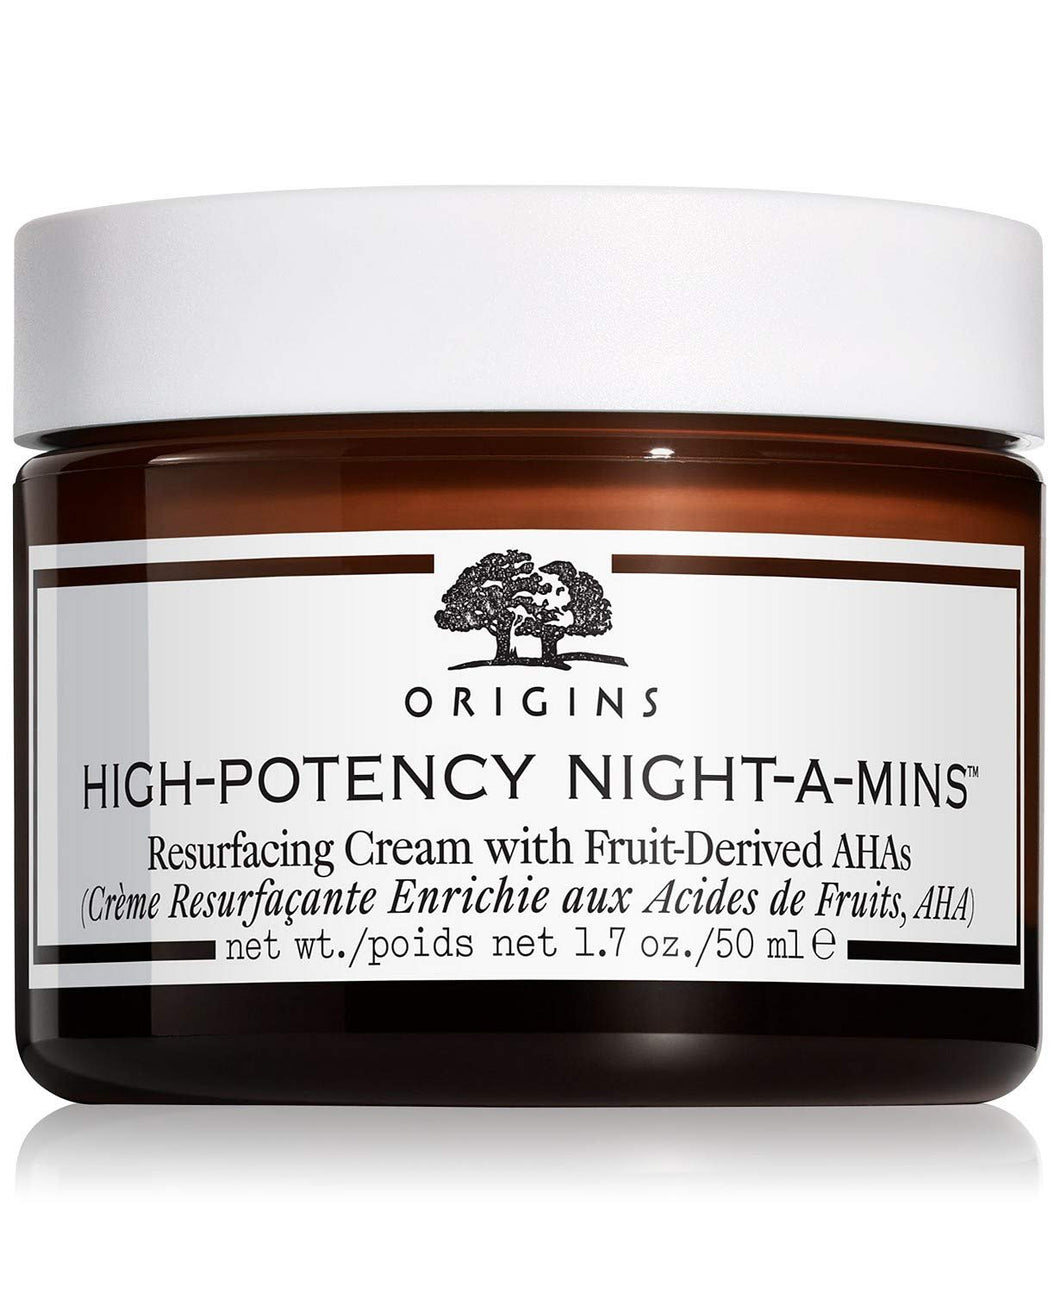 Origins High Potency Night-A-Mins Resurfacing Cream with Fruit-Derived AHA’s 1.7 oz / 50 ml